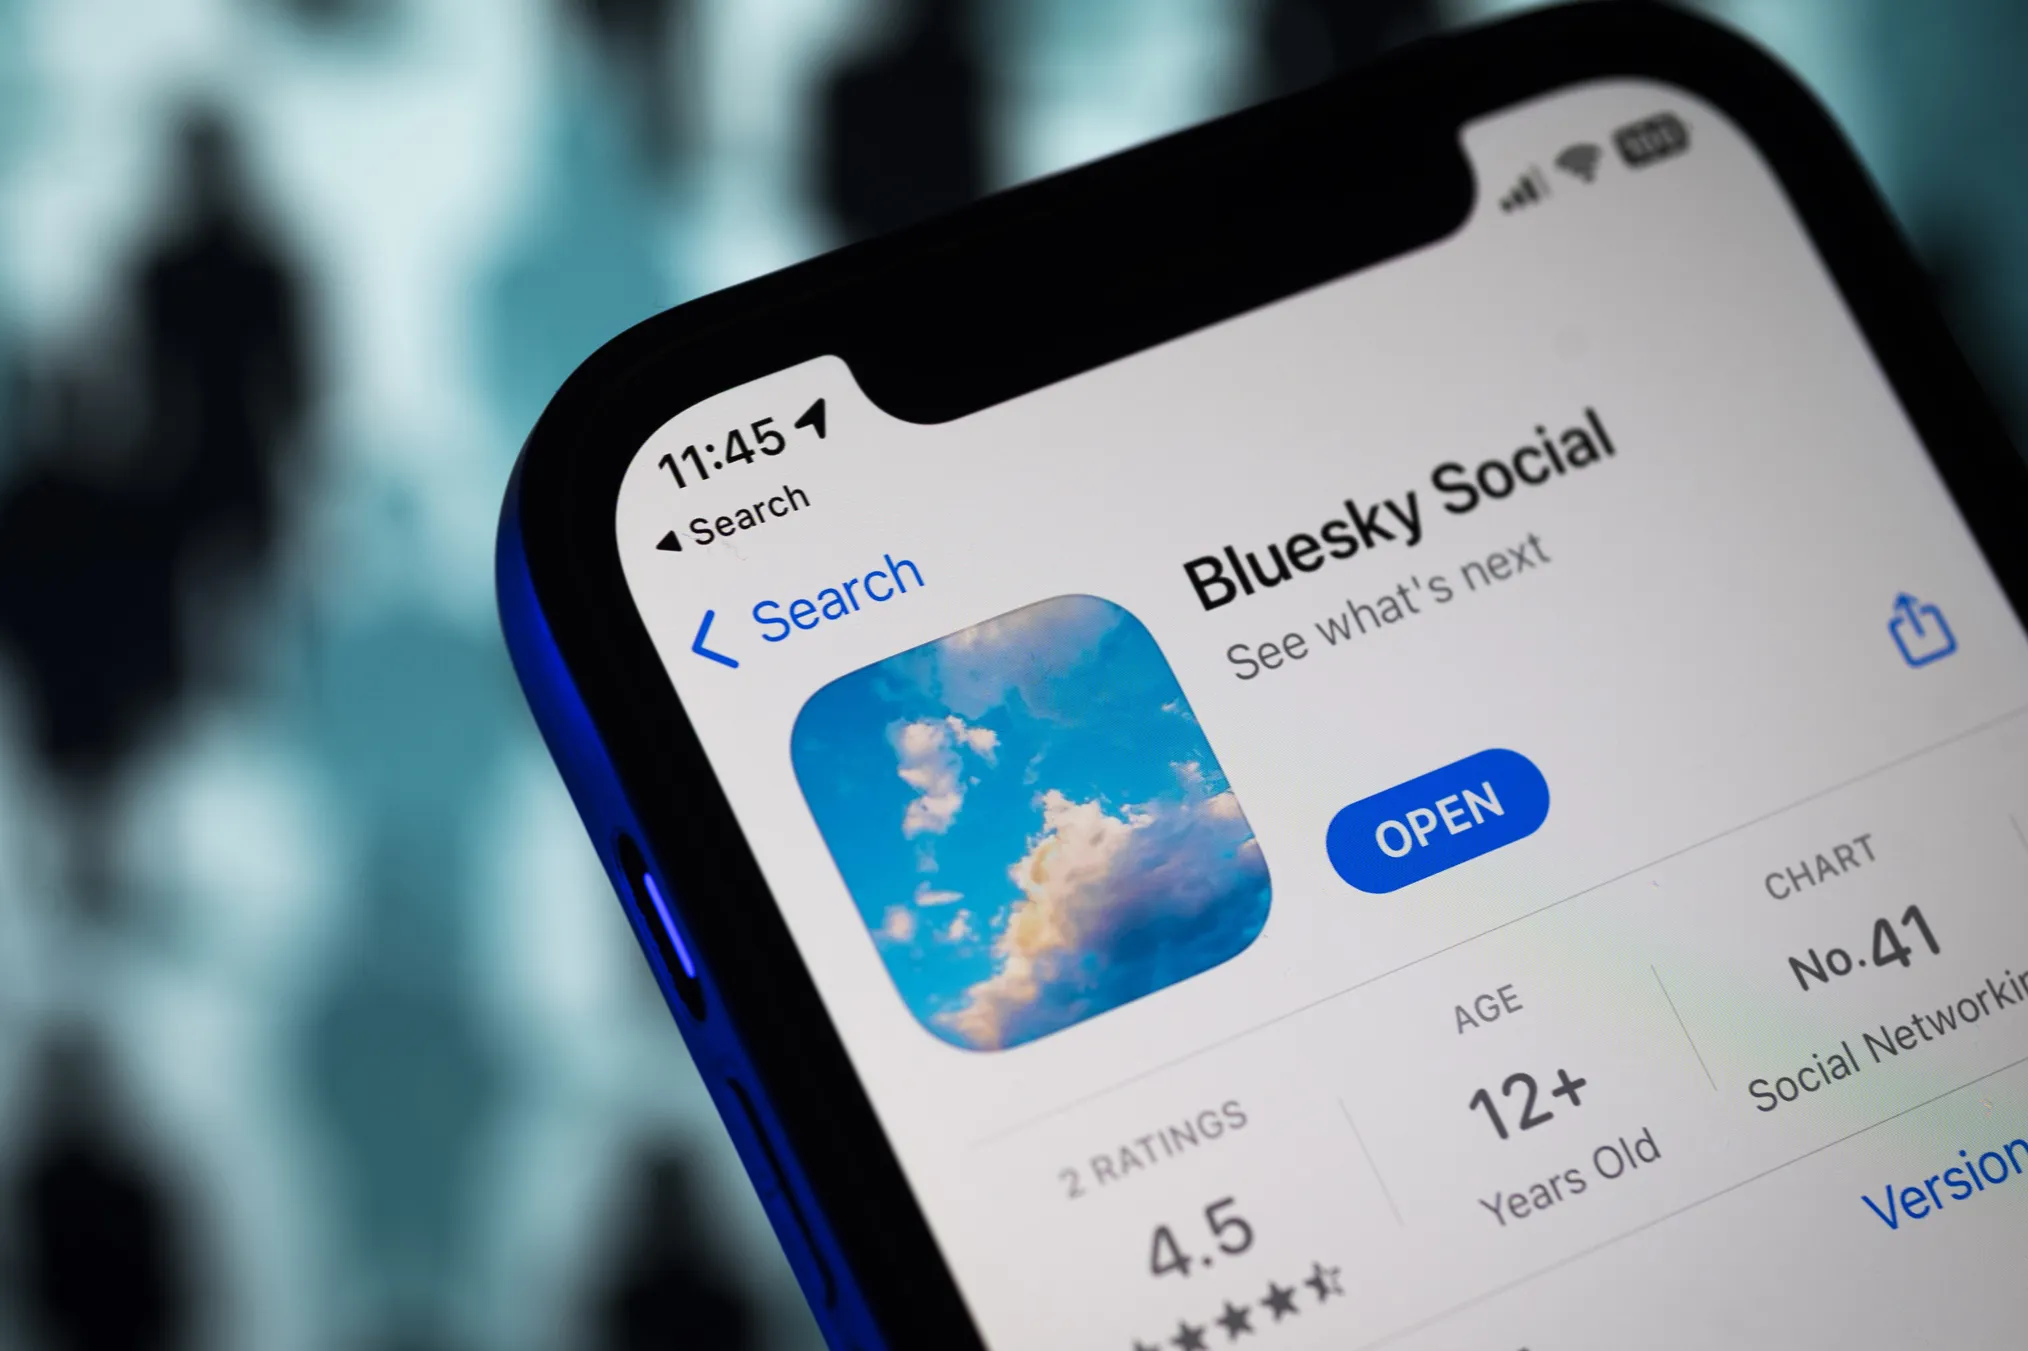 bluesky-reaches-1-million-users-milestone